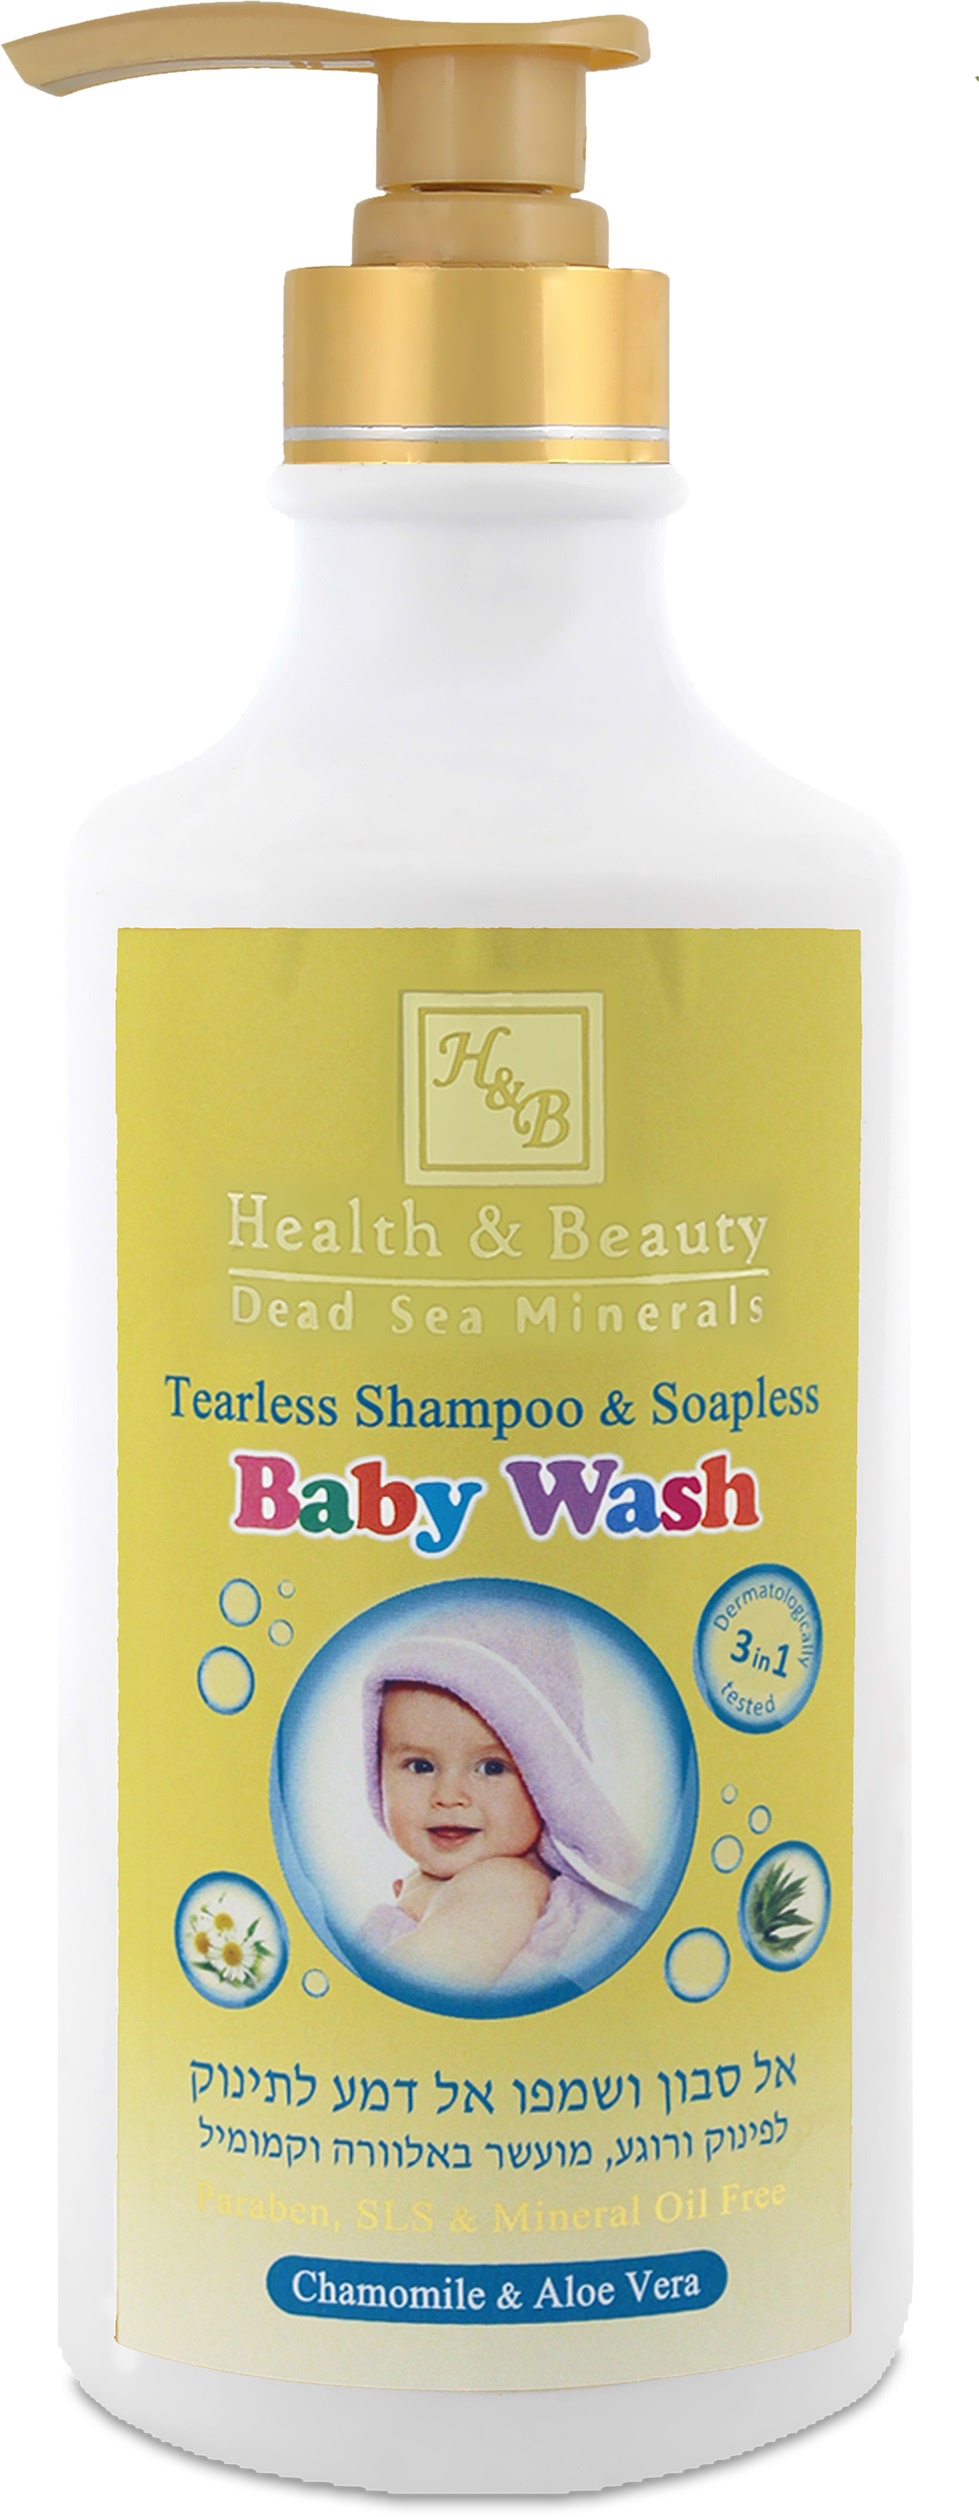 Health & Beauty Dead Sea Minerals Tearless Shampoo & Soapless Baby Wash